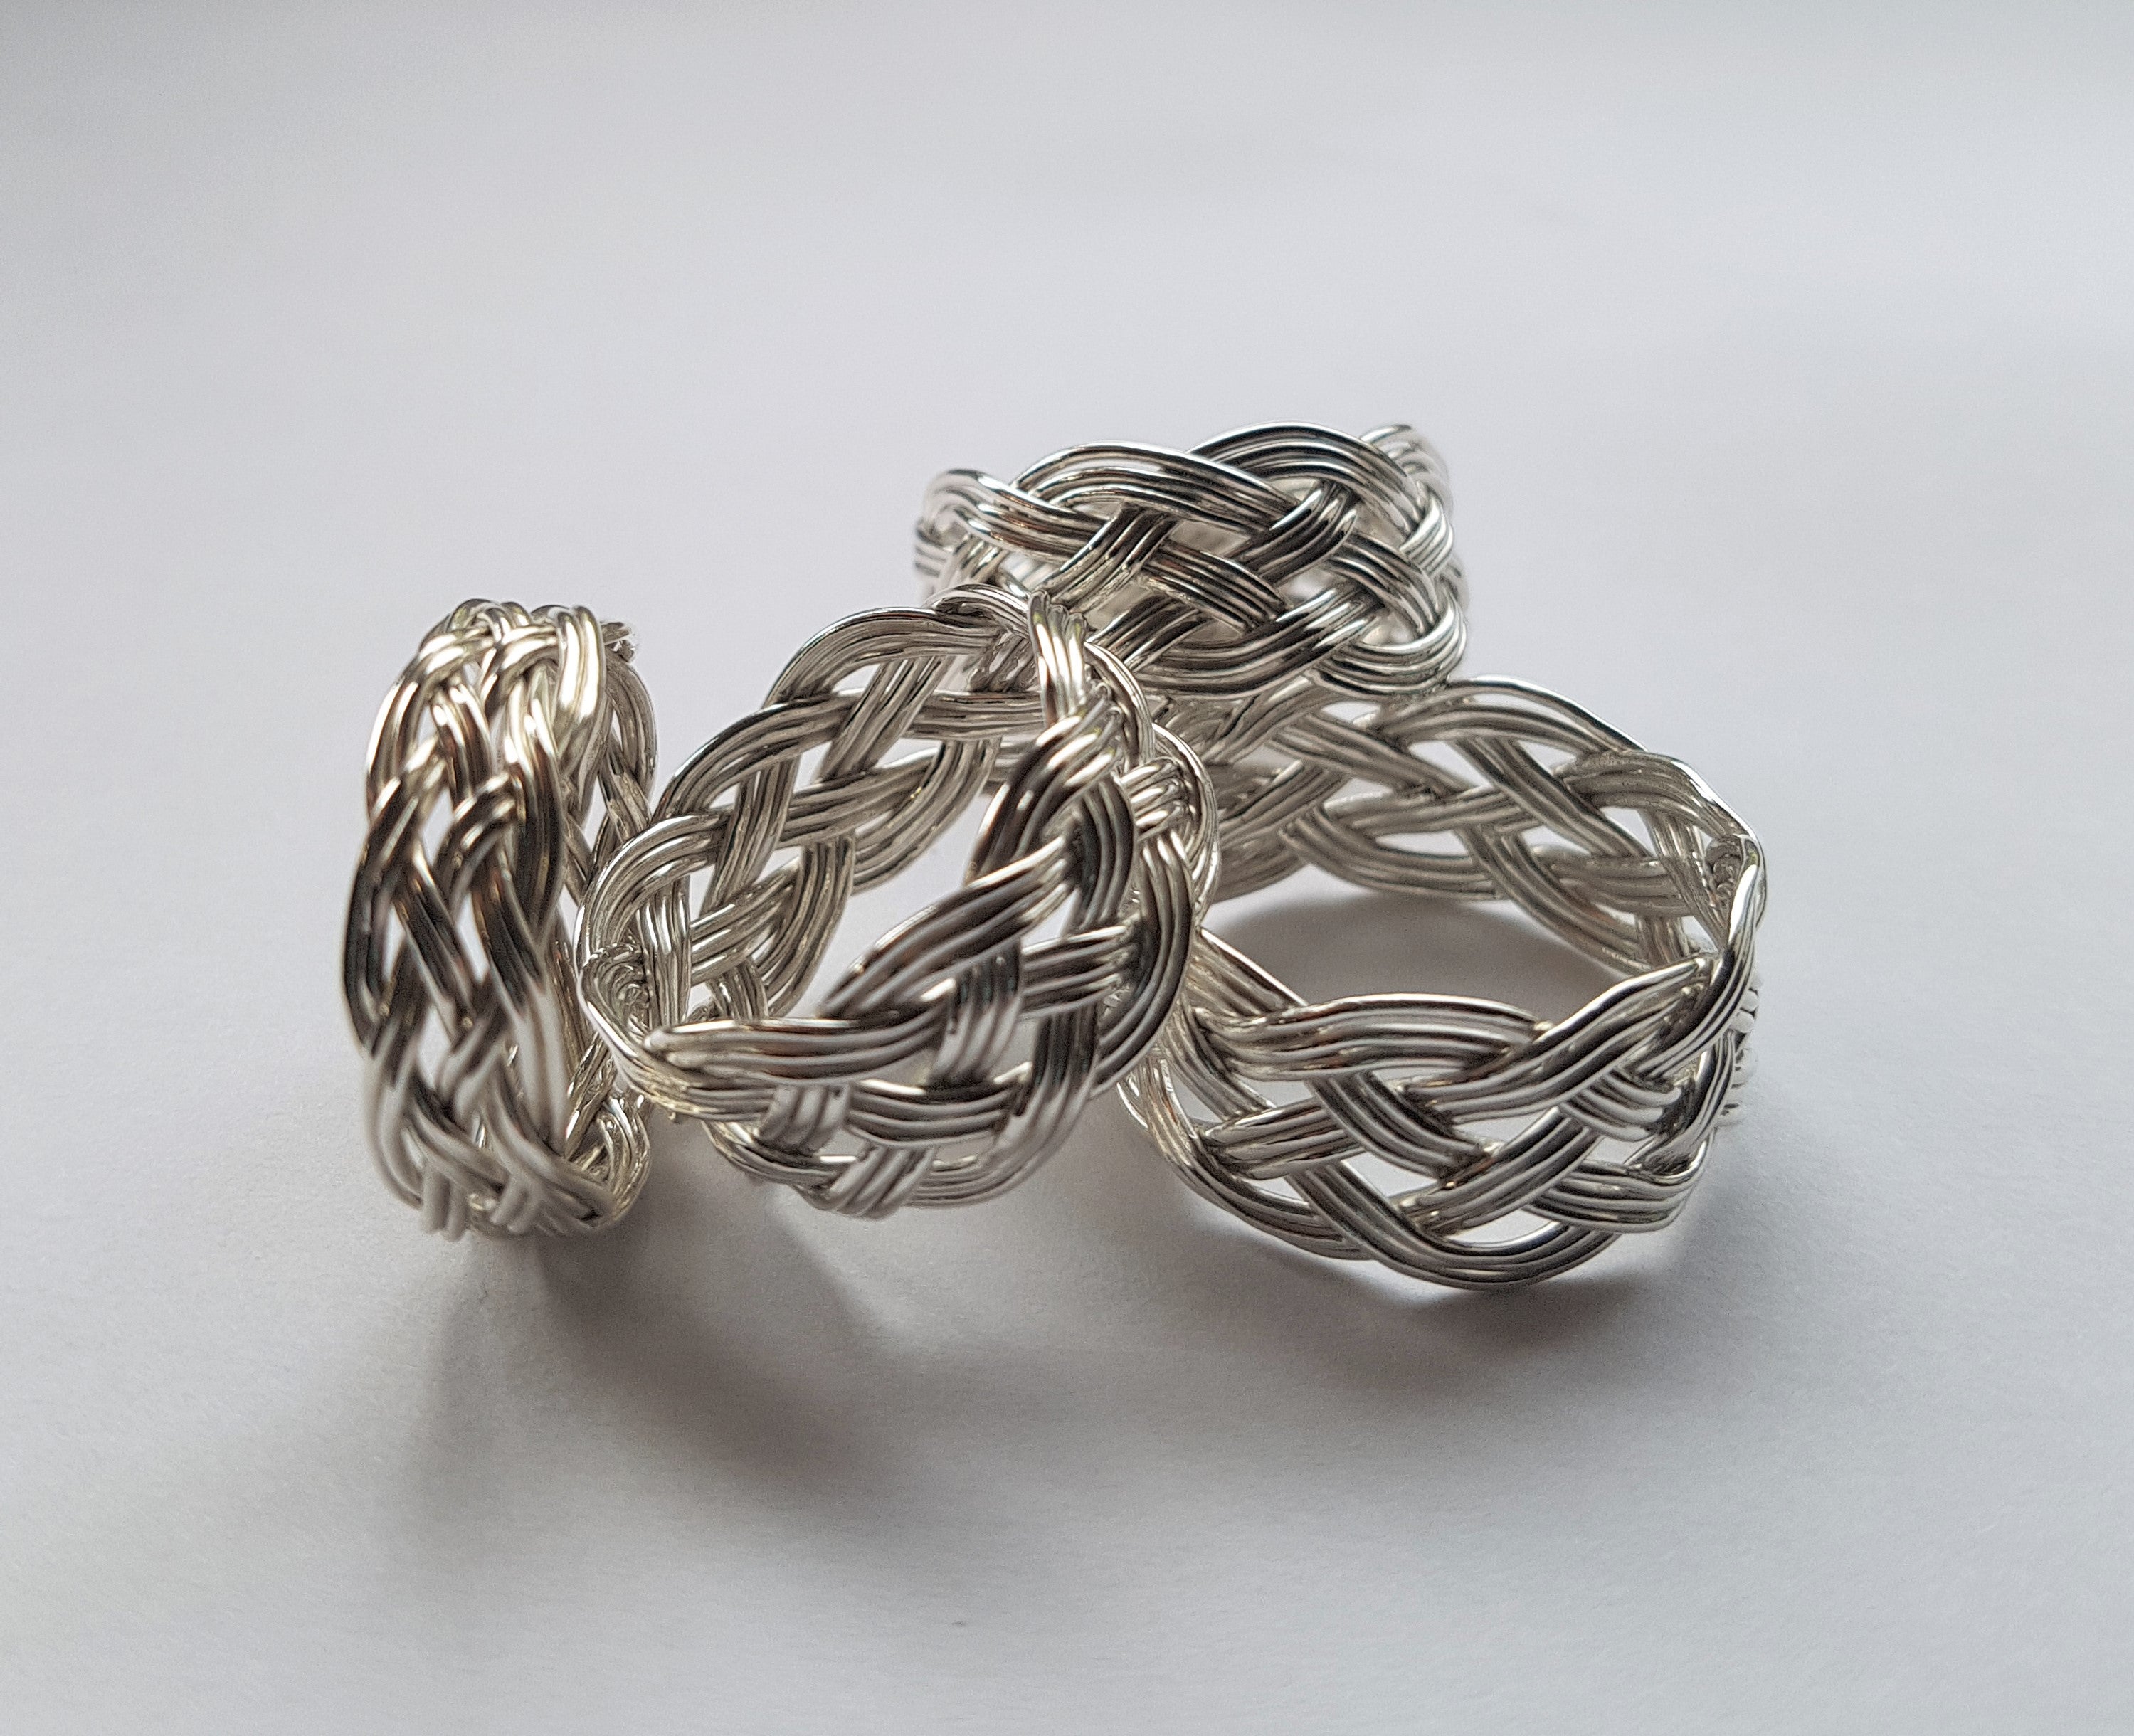 Turks Head Knot Ring, Silver - 3 strand